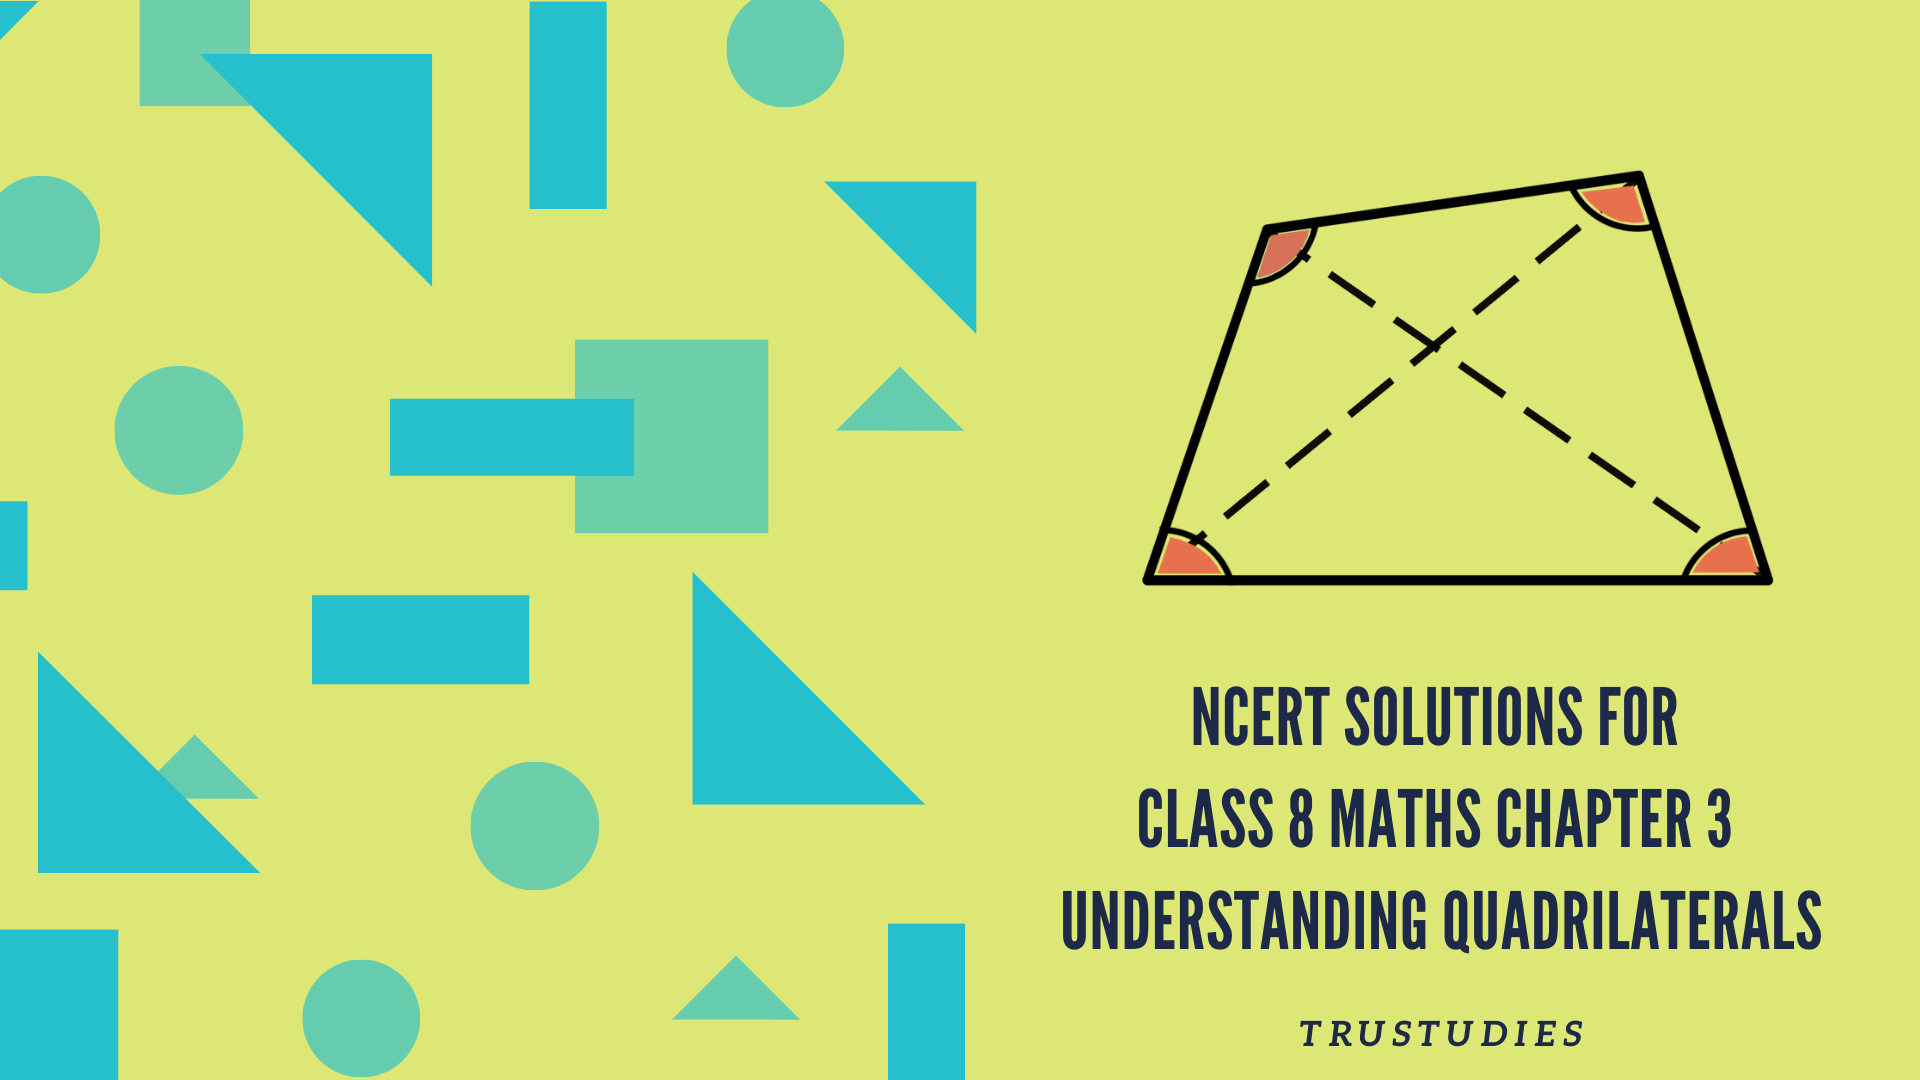 NCERT solutions for class 8 maths chapter 3 understanding quadrilaterals banner image